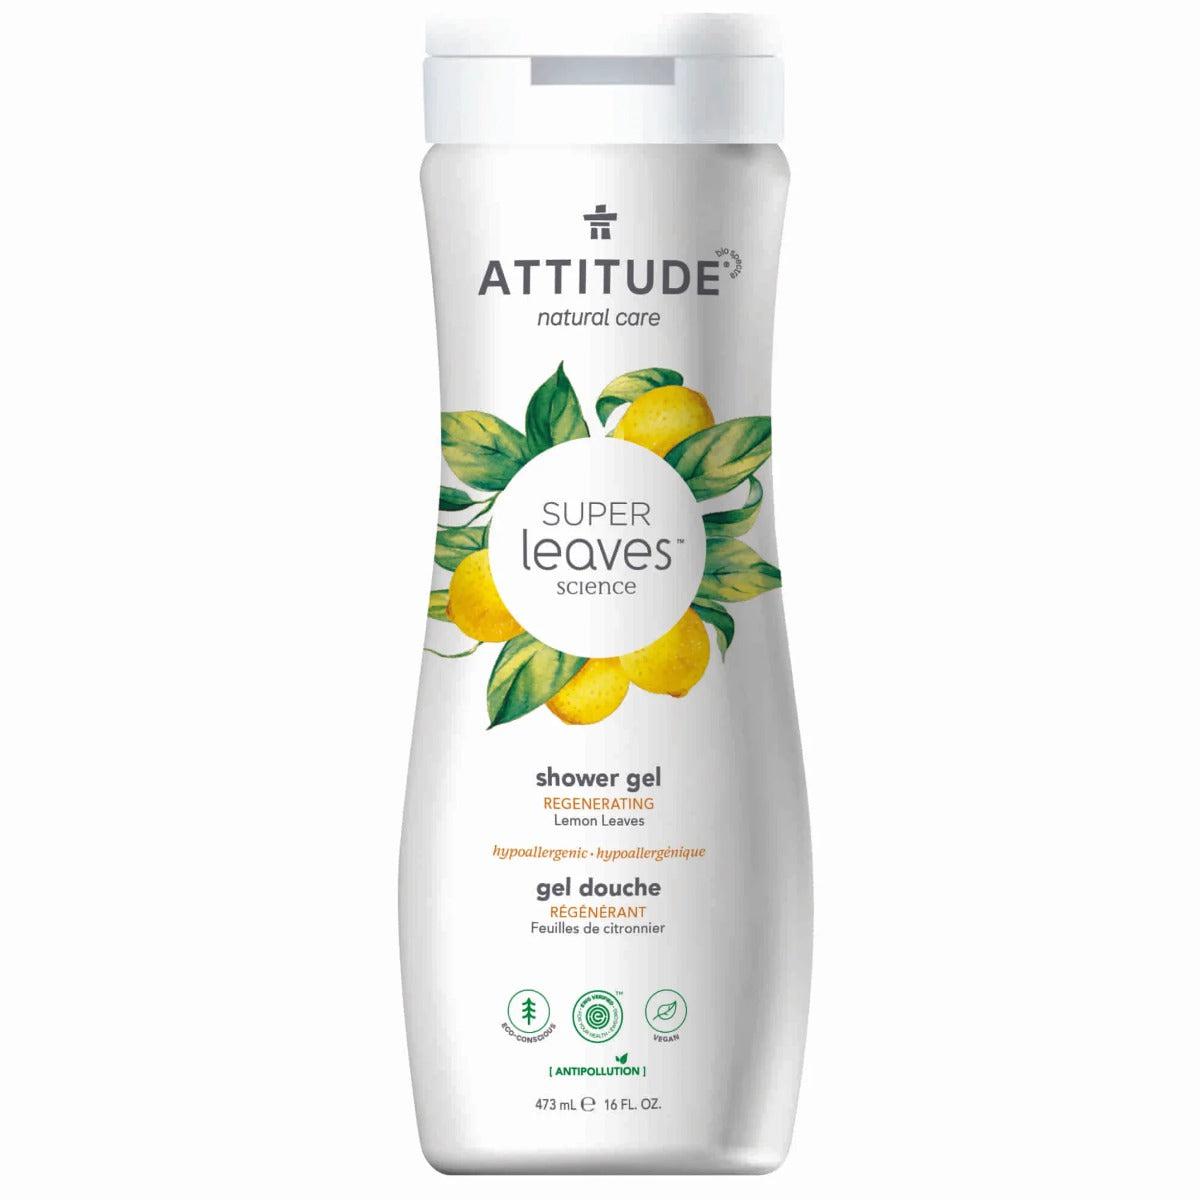 Attitude Super Leaves Natural Shower Gel Hypoallergenic Regenerating Lemon Leaves SLS FREE 473ml